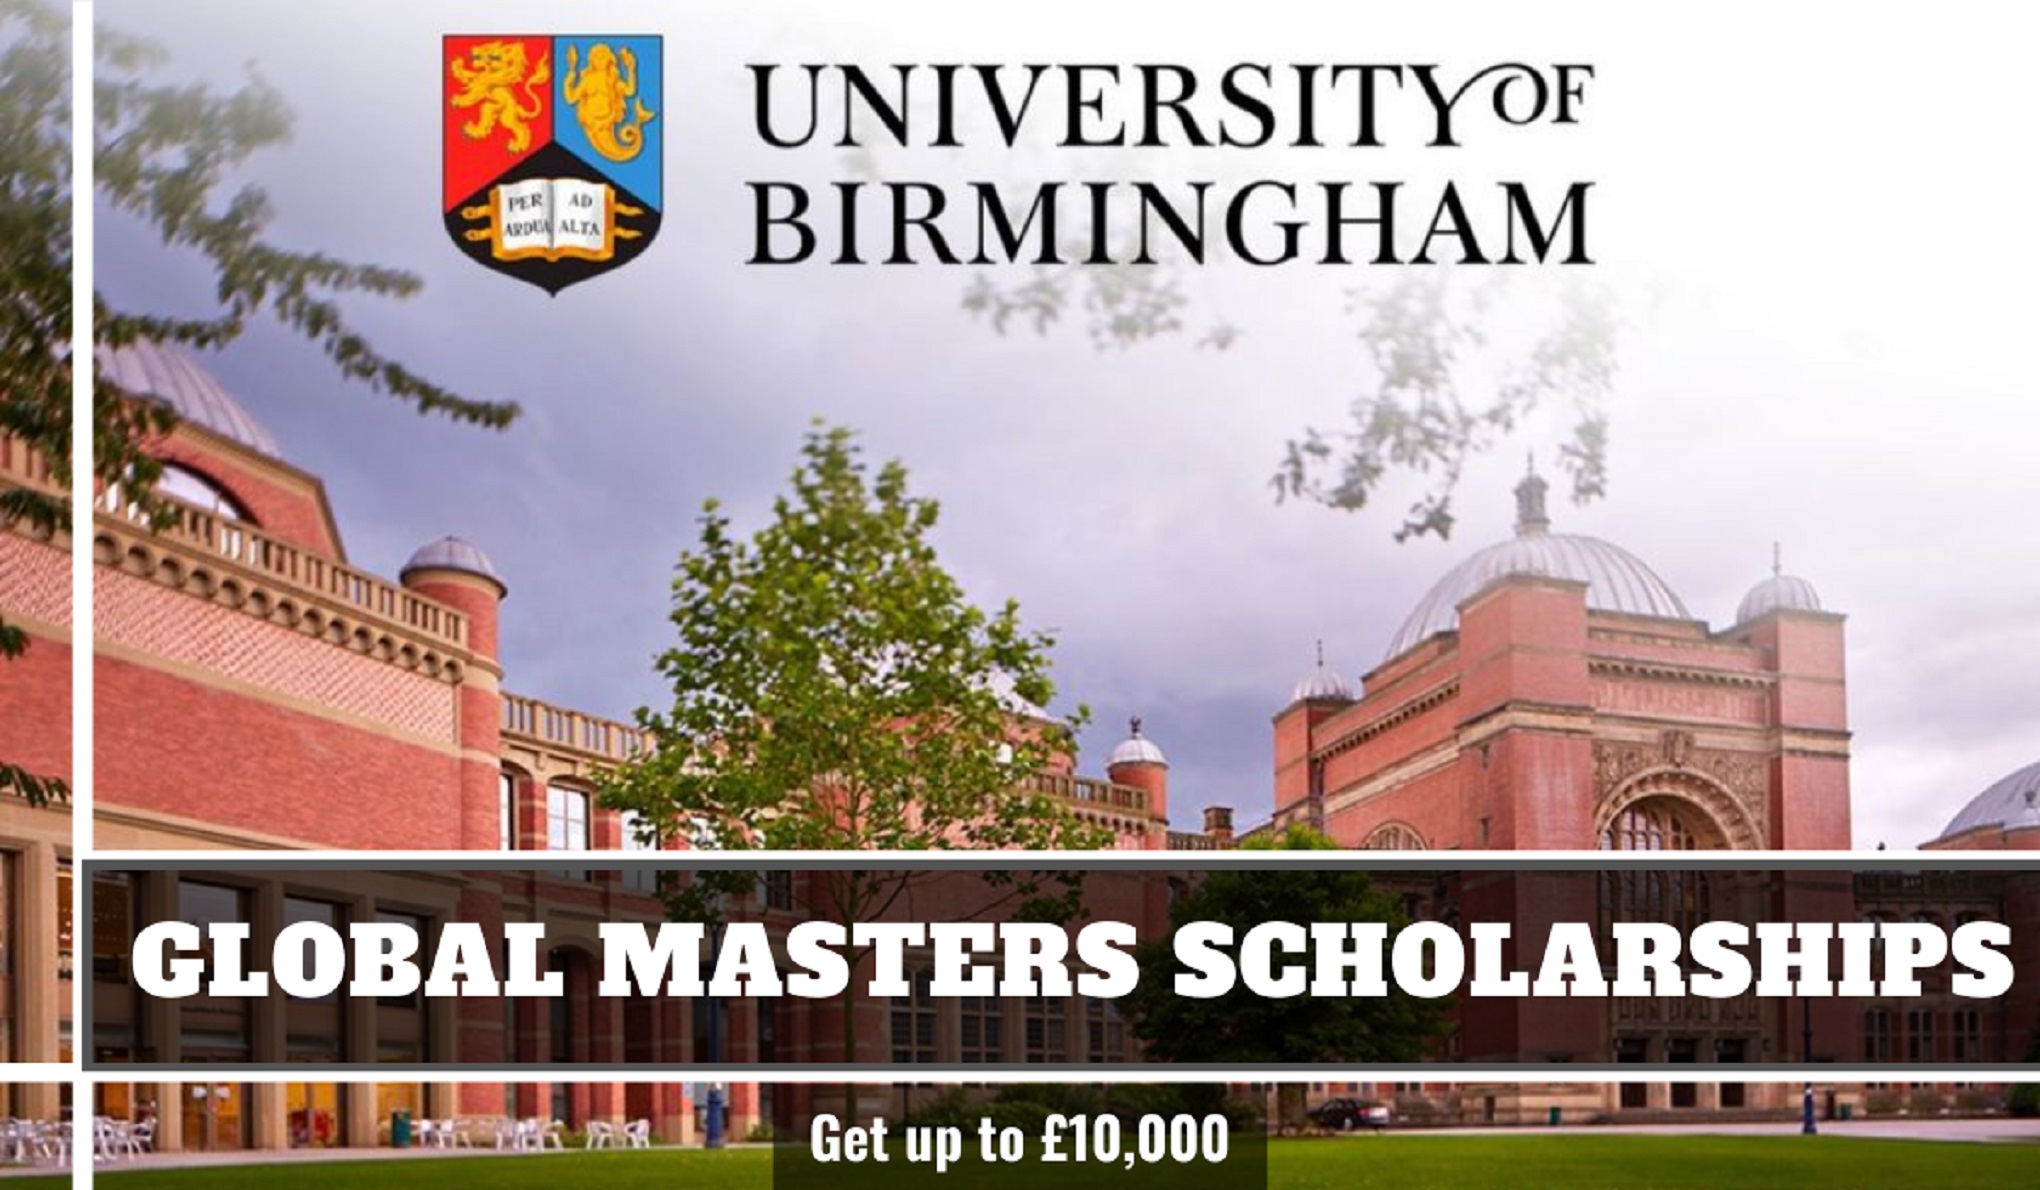 £10,000 in Funding University of Birmingham Global Masters Scholarship